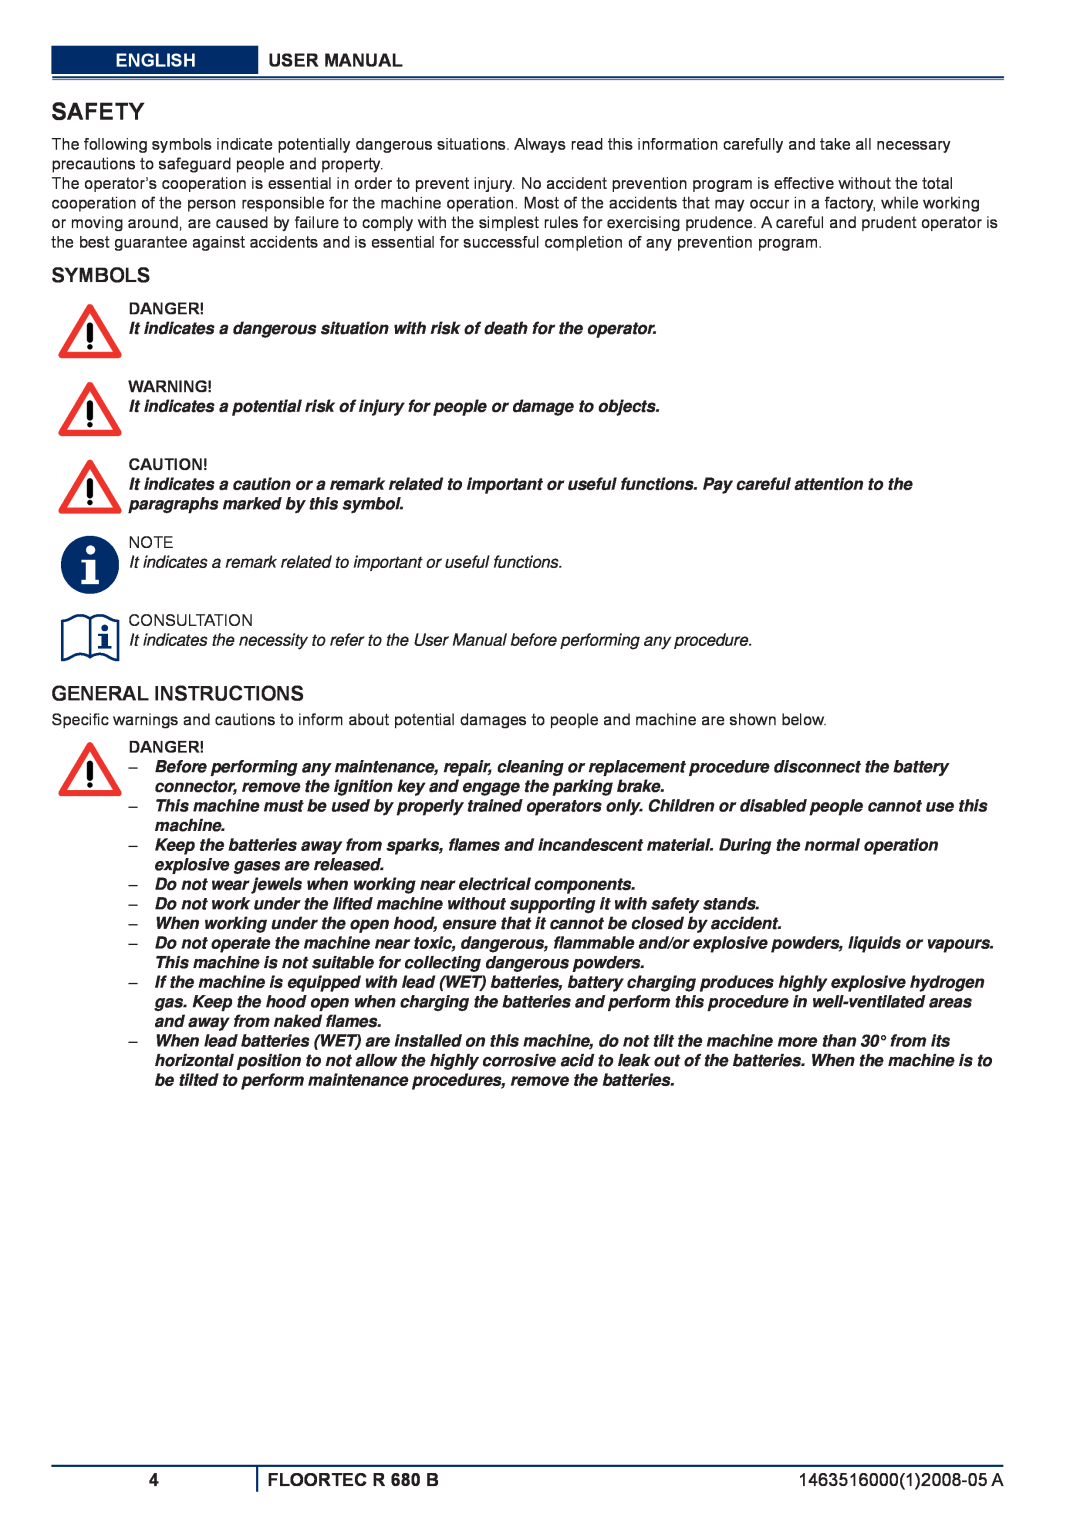 Nilfisk-ALTO manuel dutilisation Safety, Symbols, General Instructions, English, User Manual, FLOORTEC R 680 B, Danger 